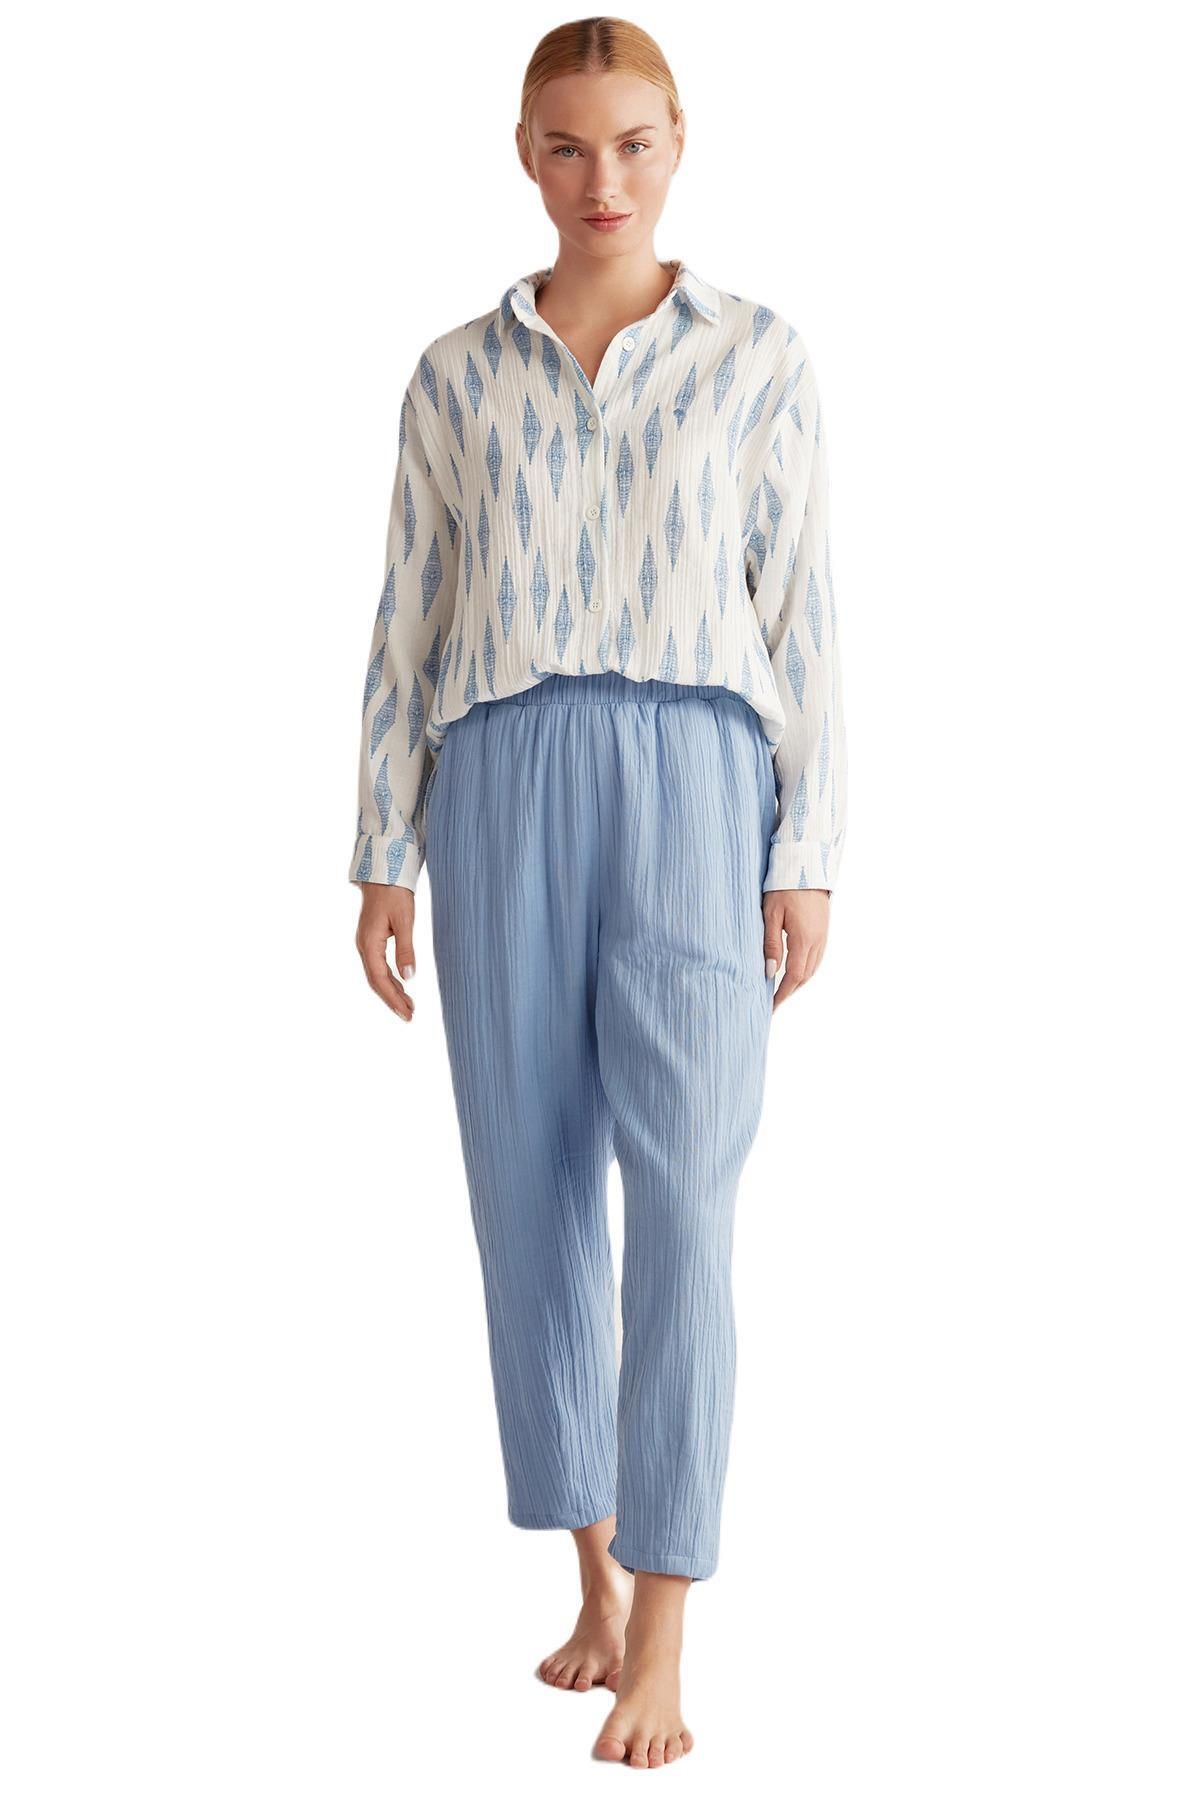 Catherines Kadın Mavi Pijama Takımı